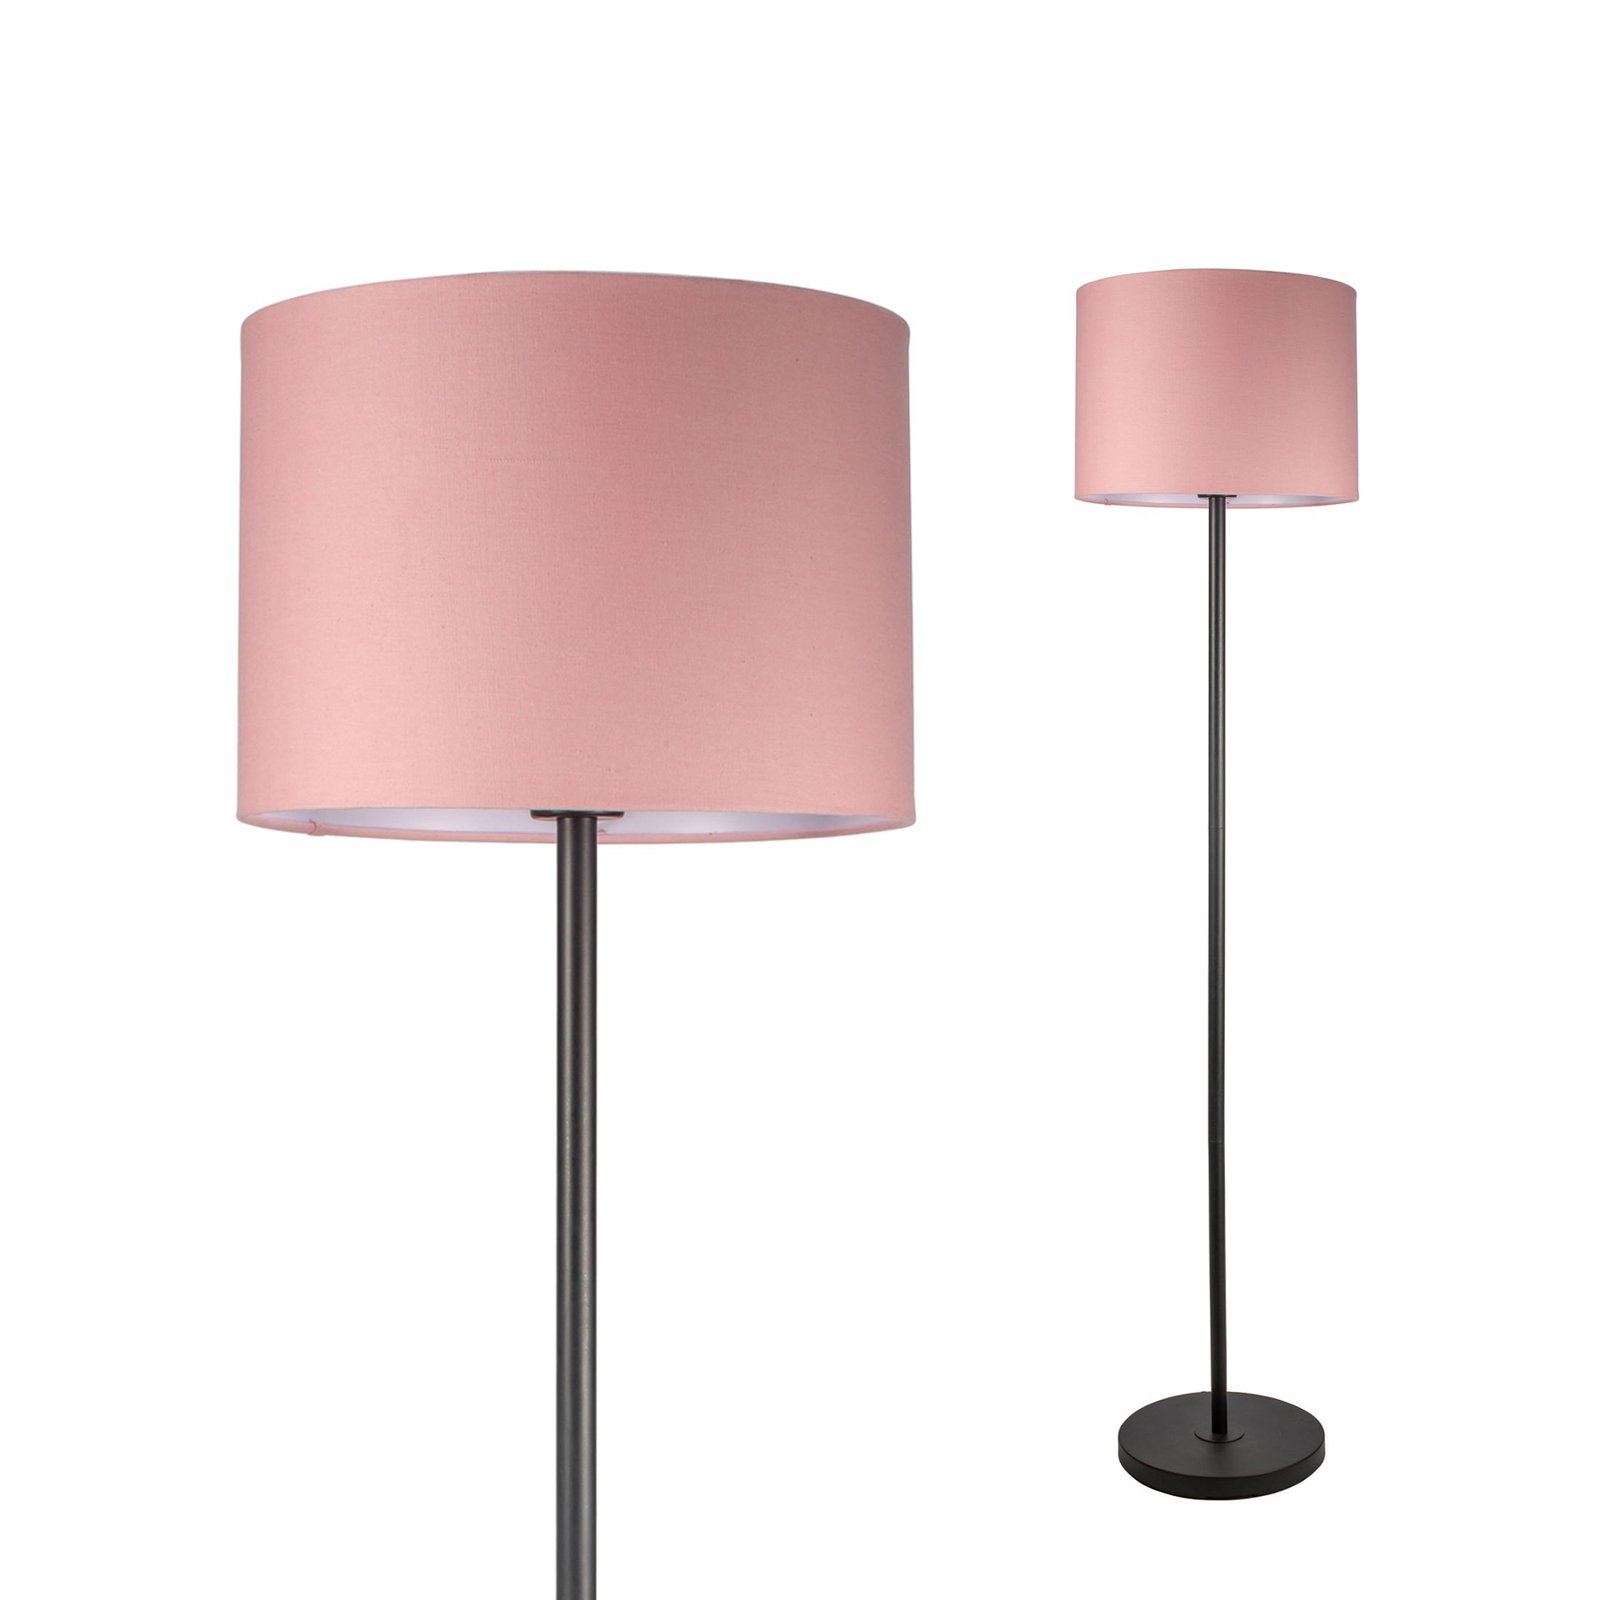 Pauleen Grand Reverie floor lamp in pink/black